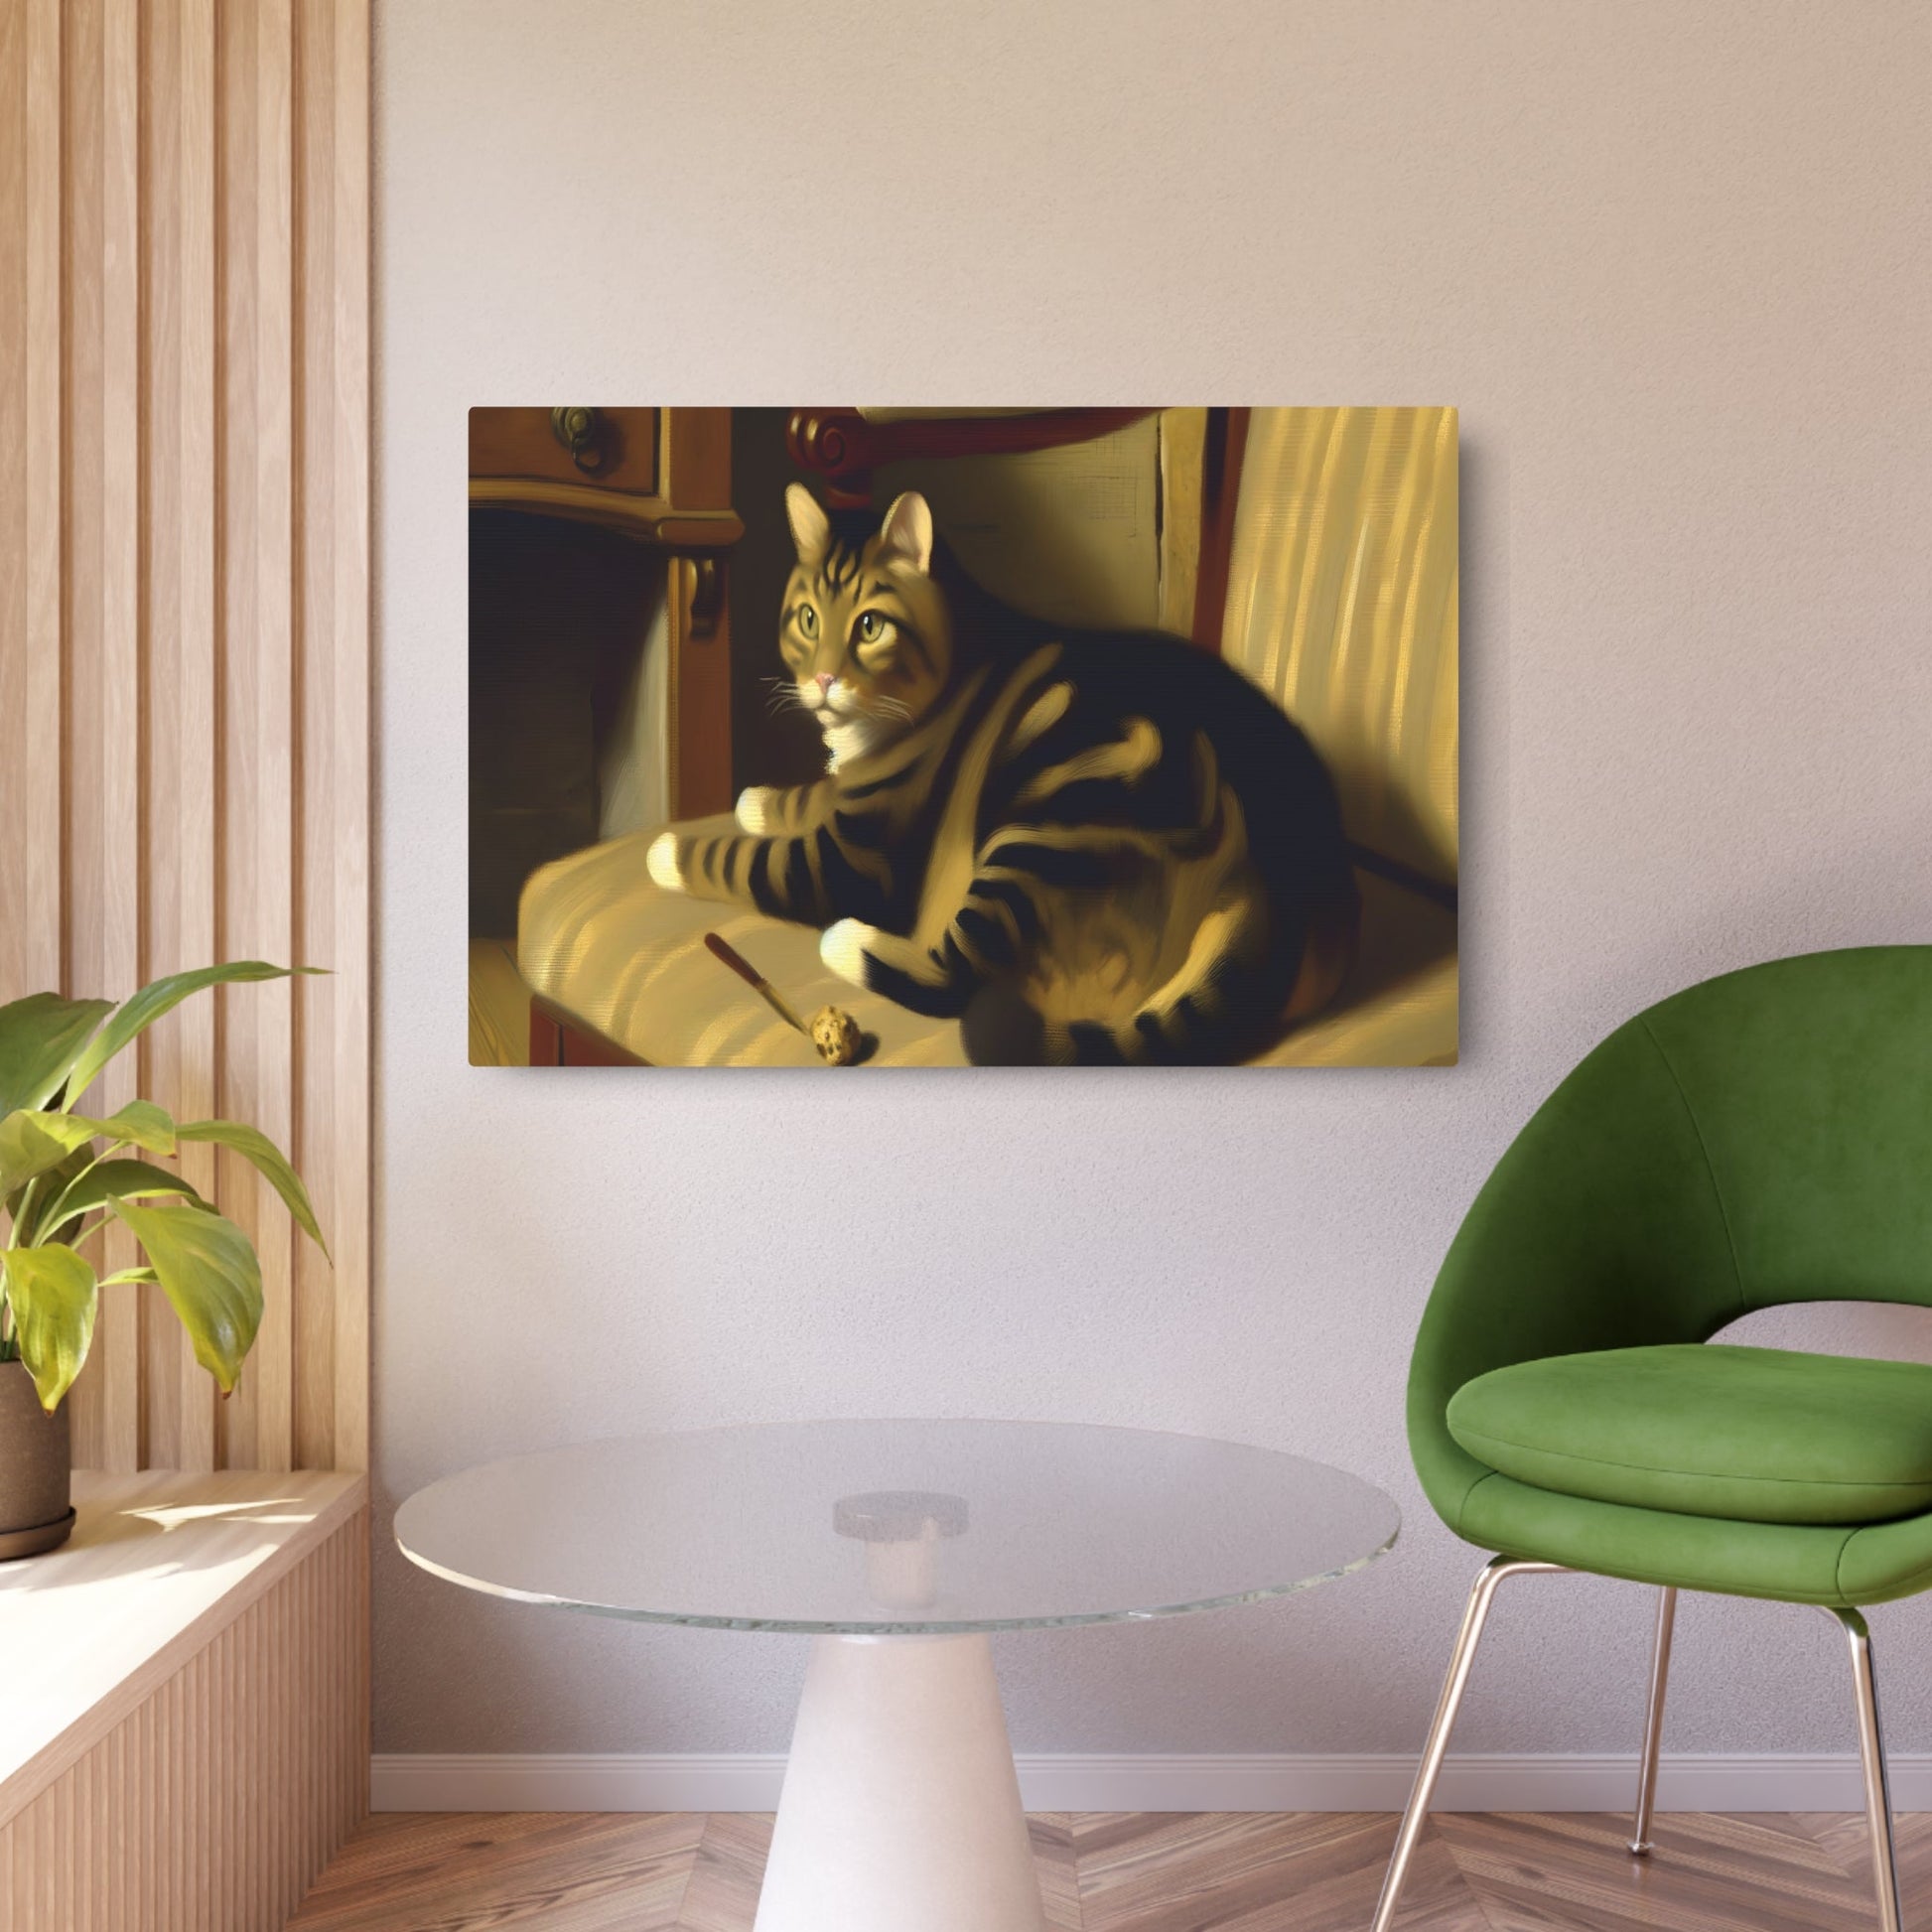 Metal Poster Art | "Realistic Realism Art Style: Detailed Domestic Cat Portrait in Western Art Styles" - Metal Poster Art 36″ x 24″ (Horizontal) 0.12''